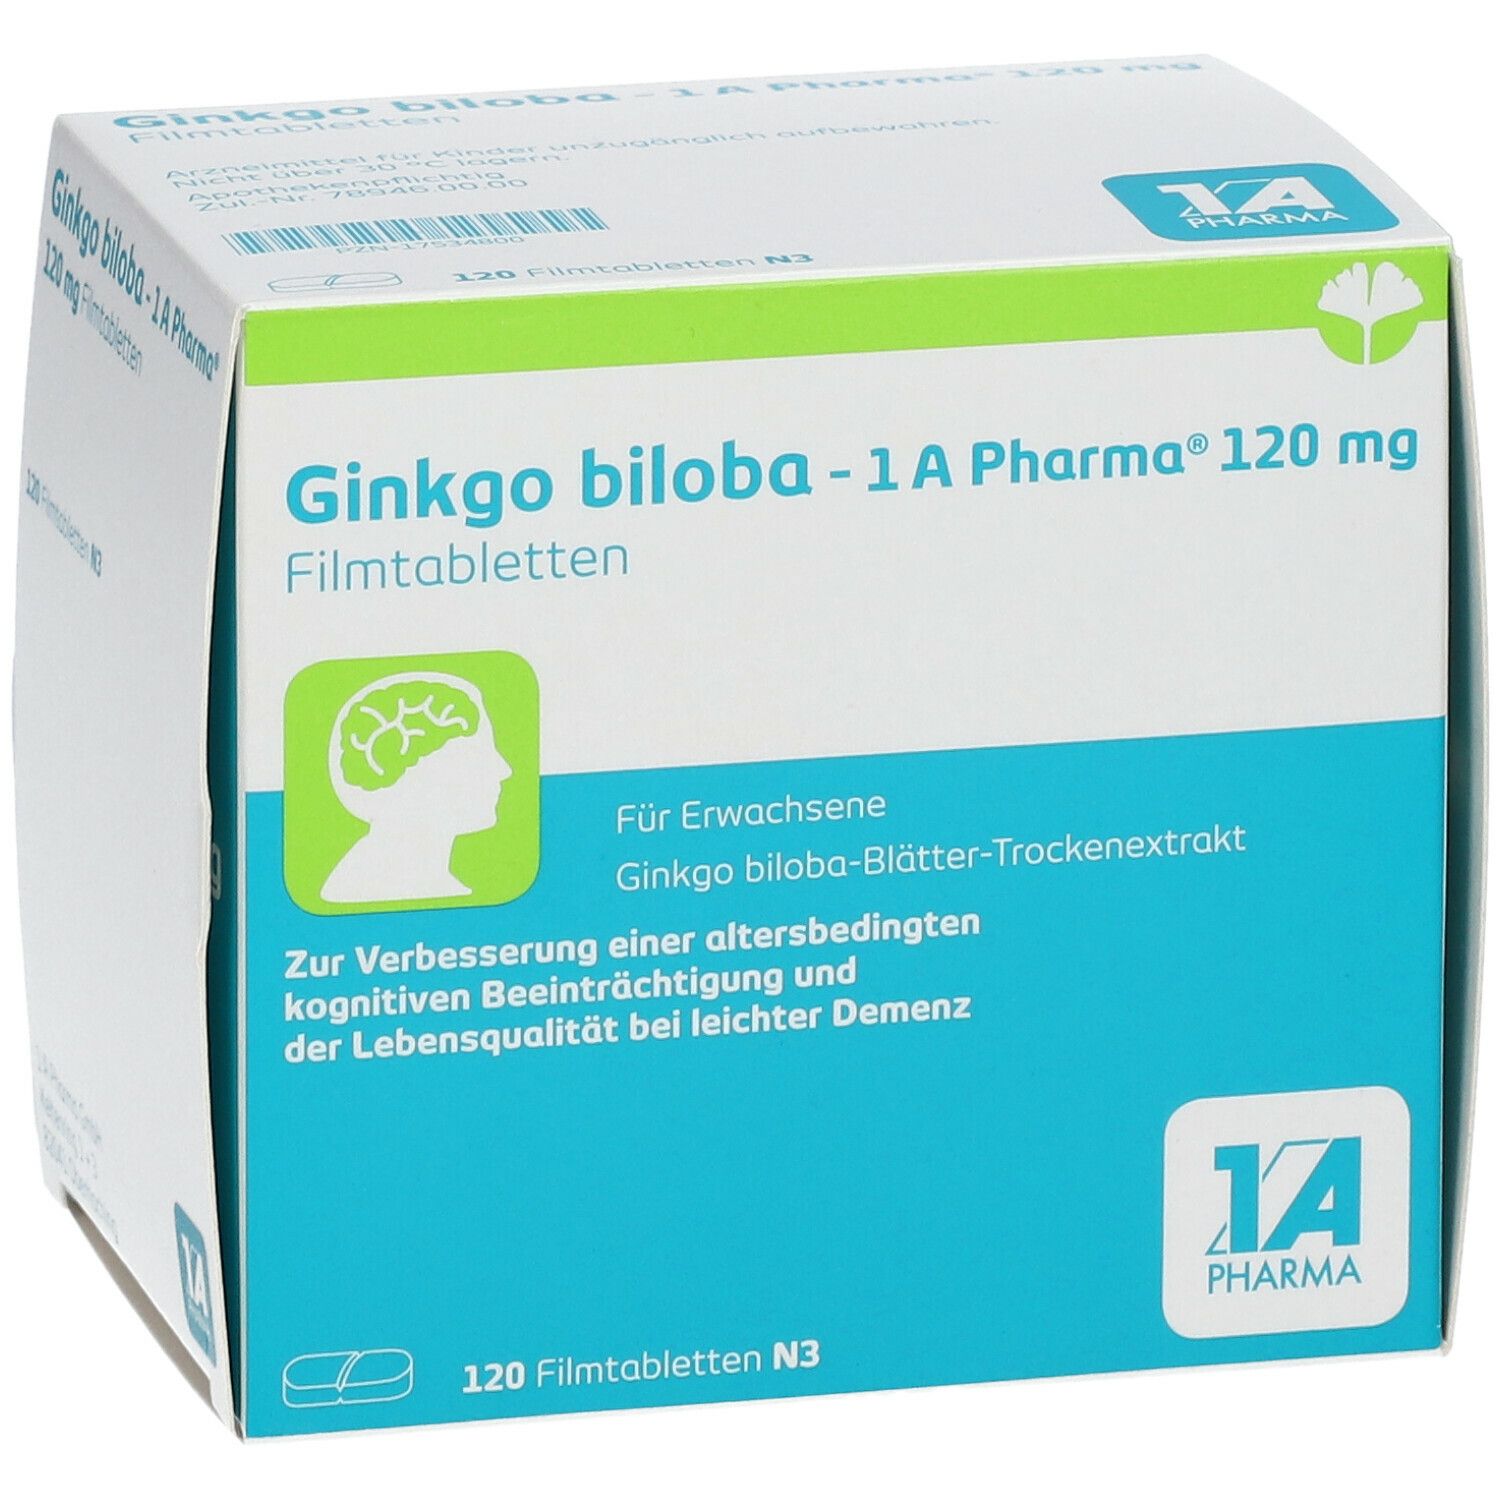 Ginkgo biloba – 1 A Pharma® 120 mg